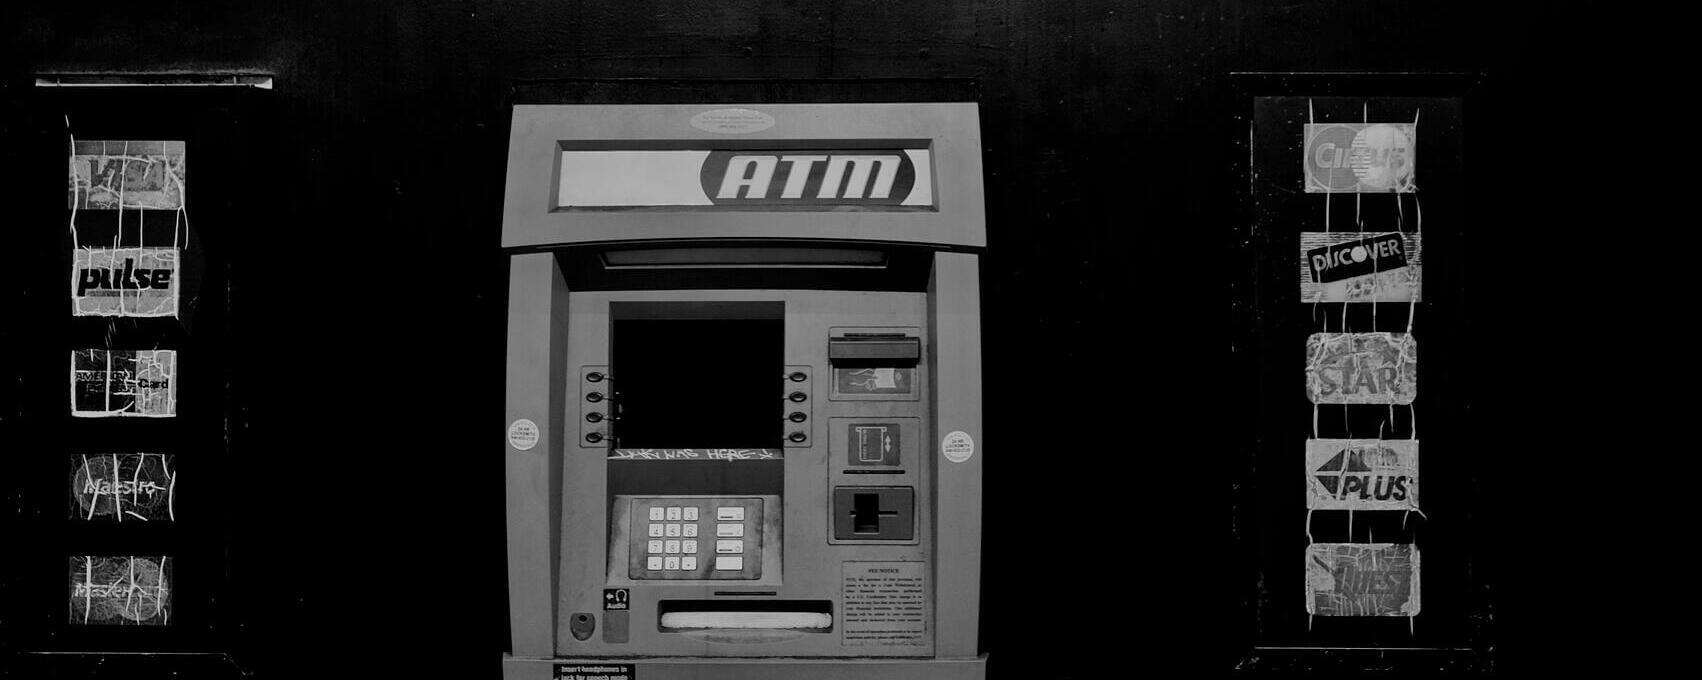 Kreditkarte ATM